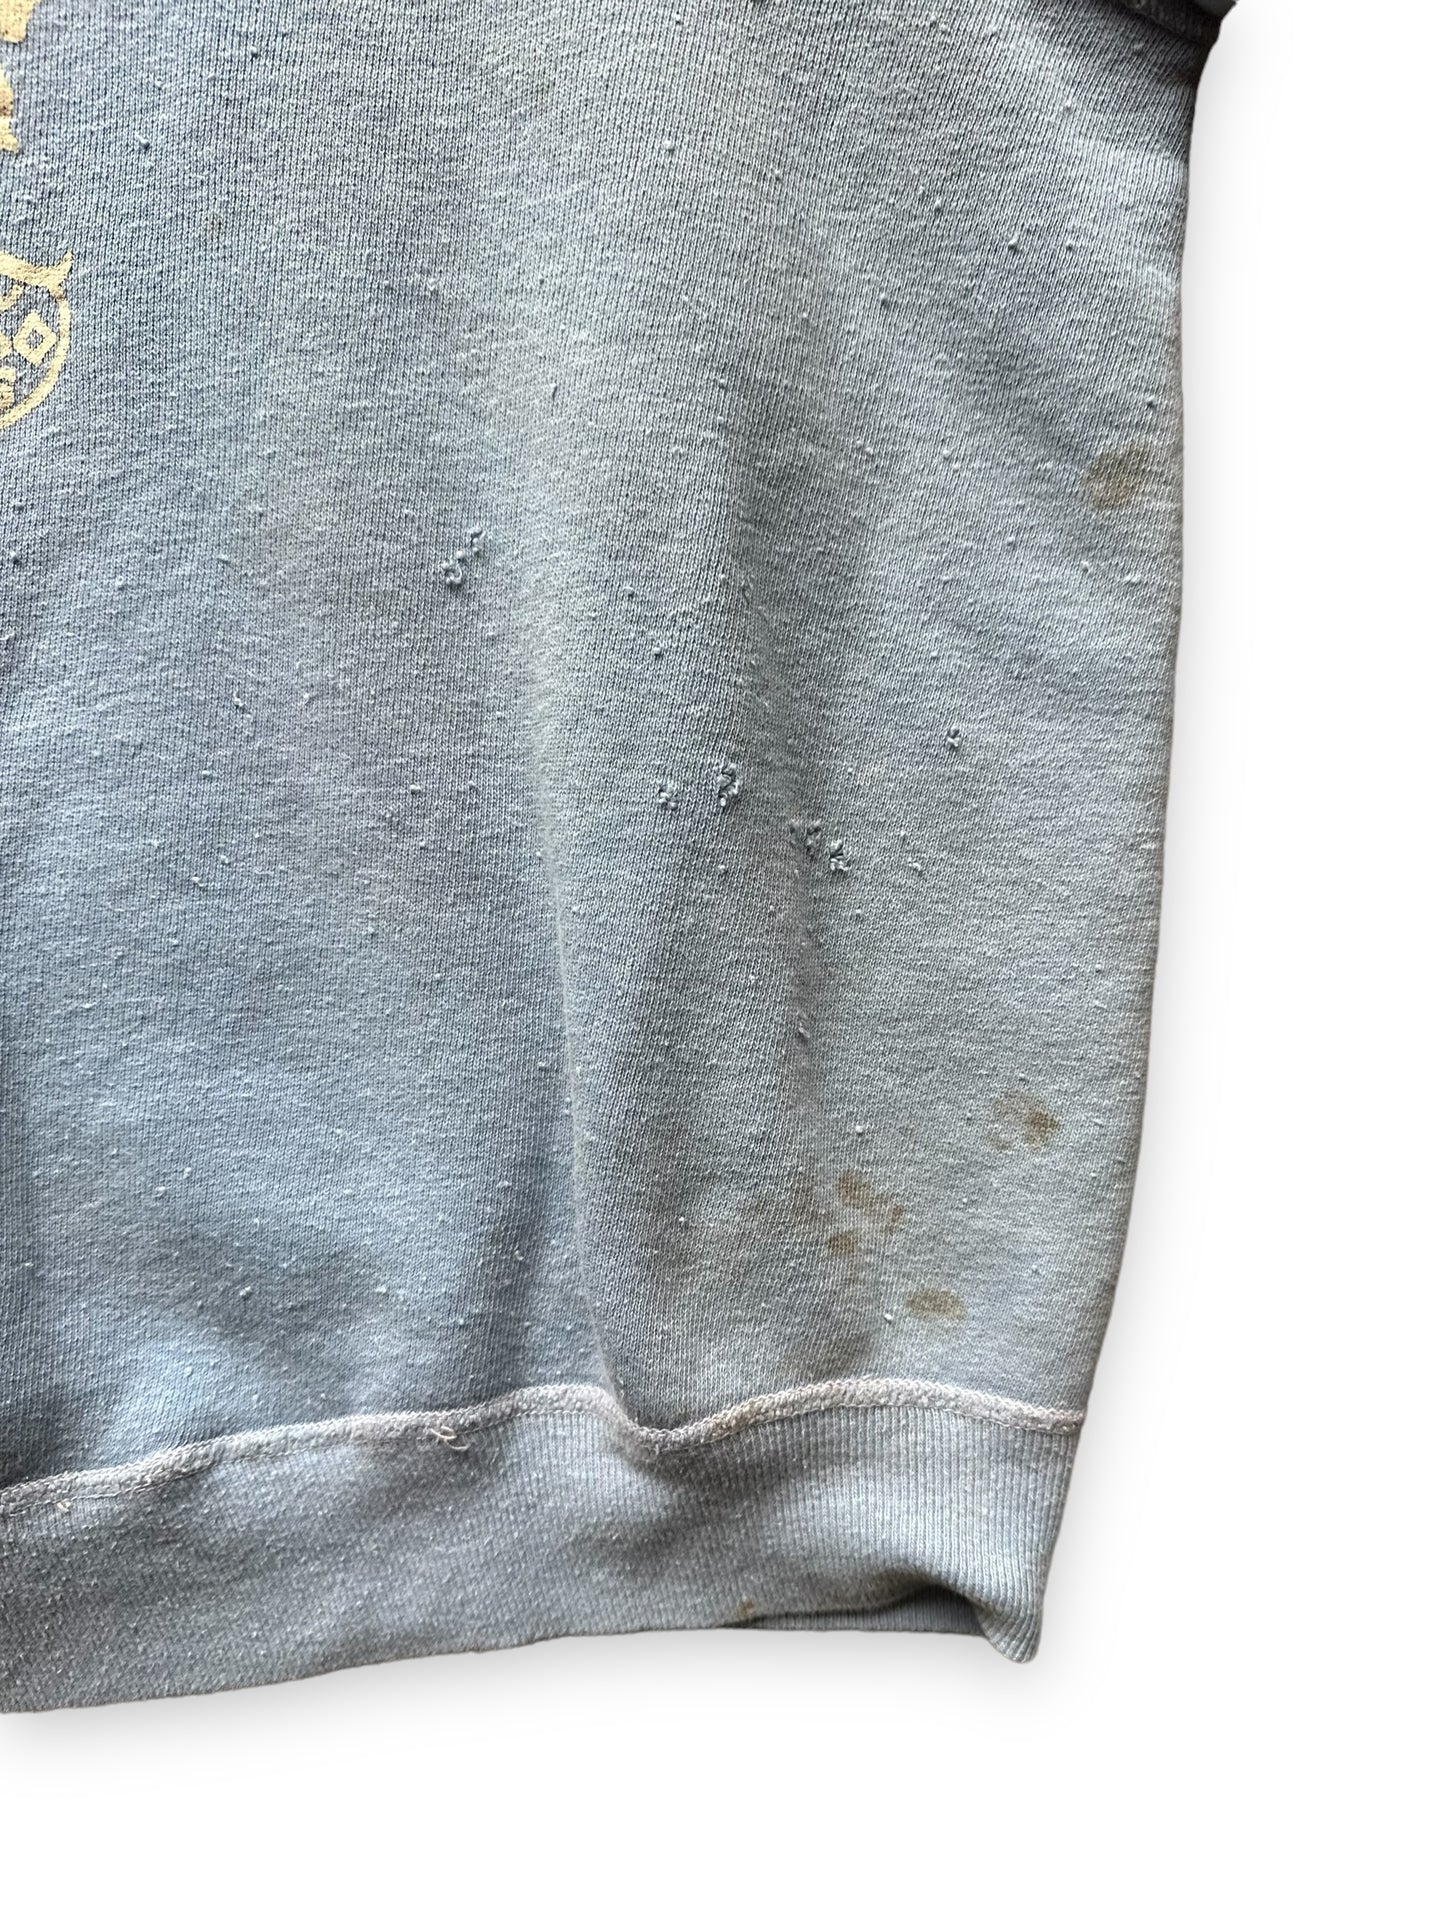 Lower Blemishes on Vintage Distressed Cheley Camps Colorado Crewneck Sweatshirt | Vintage Crewneck Seattle | Barn Owl Vintage Clothing